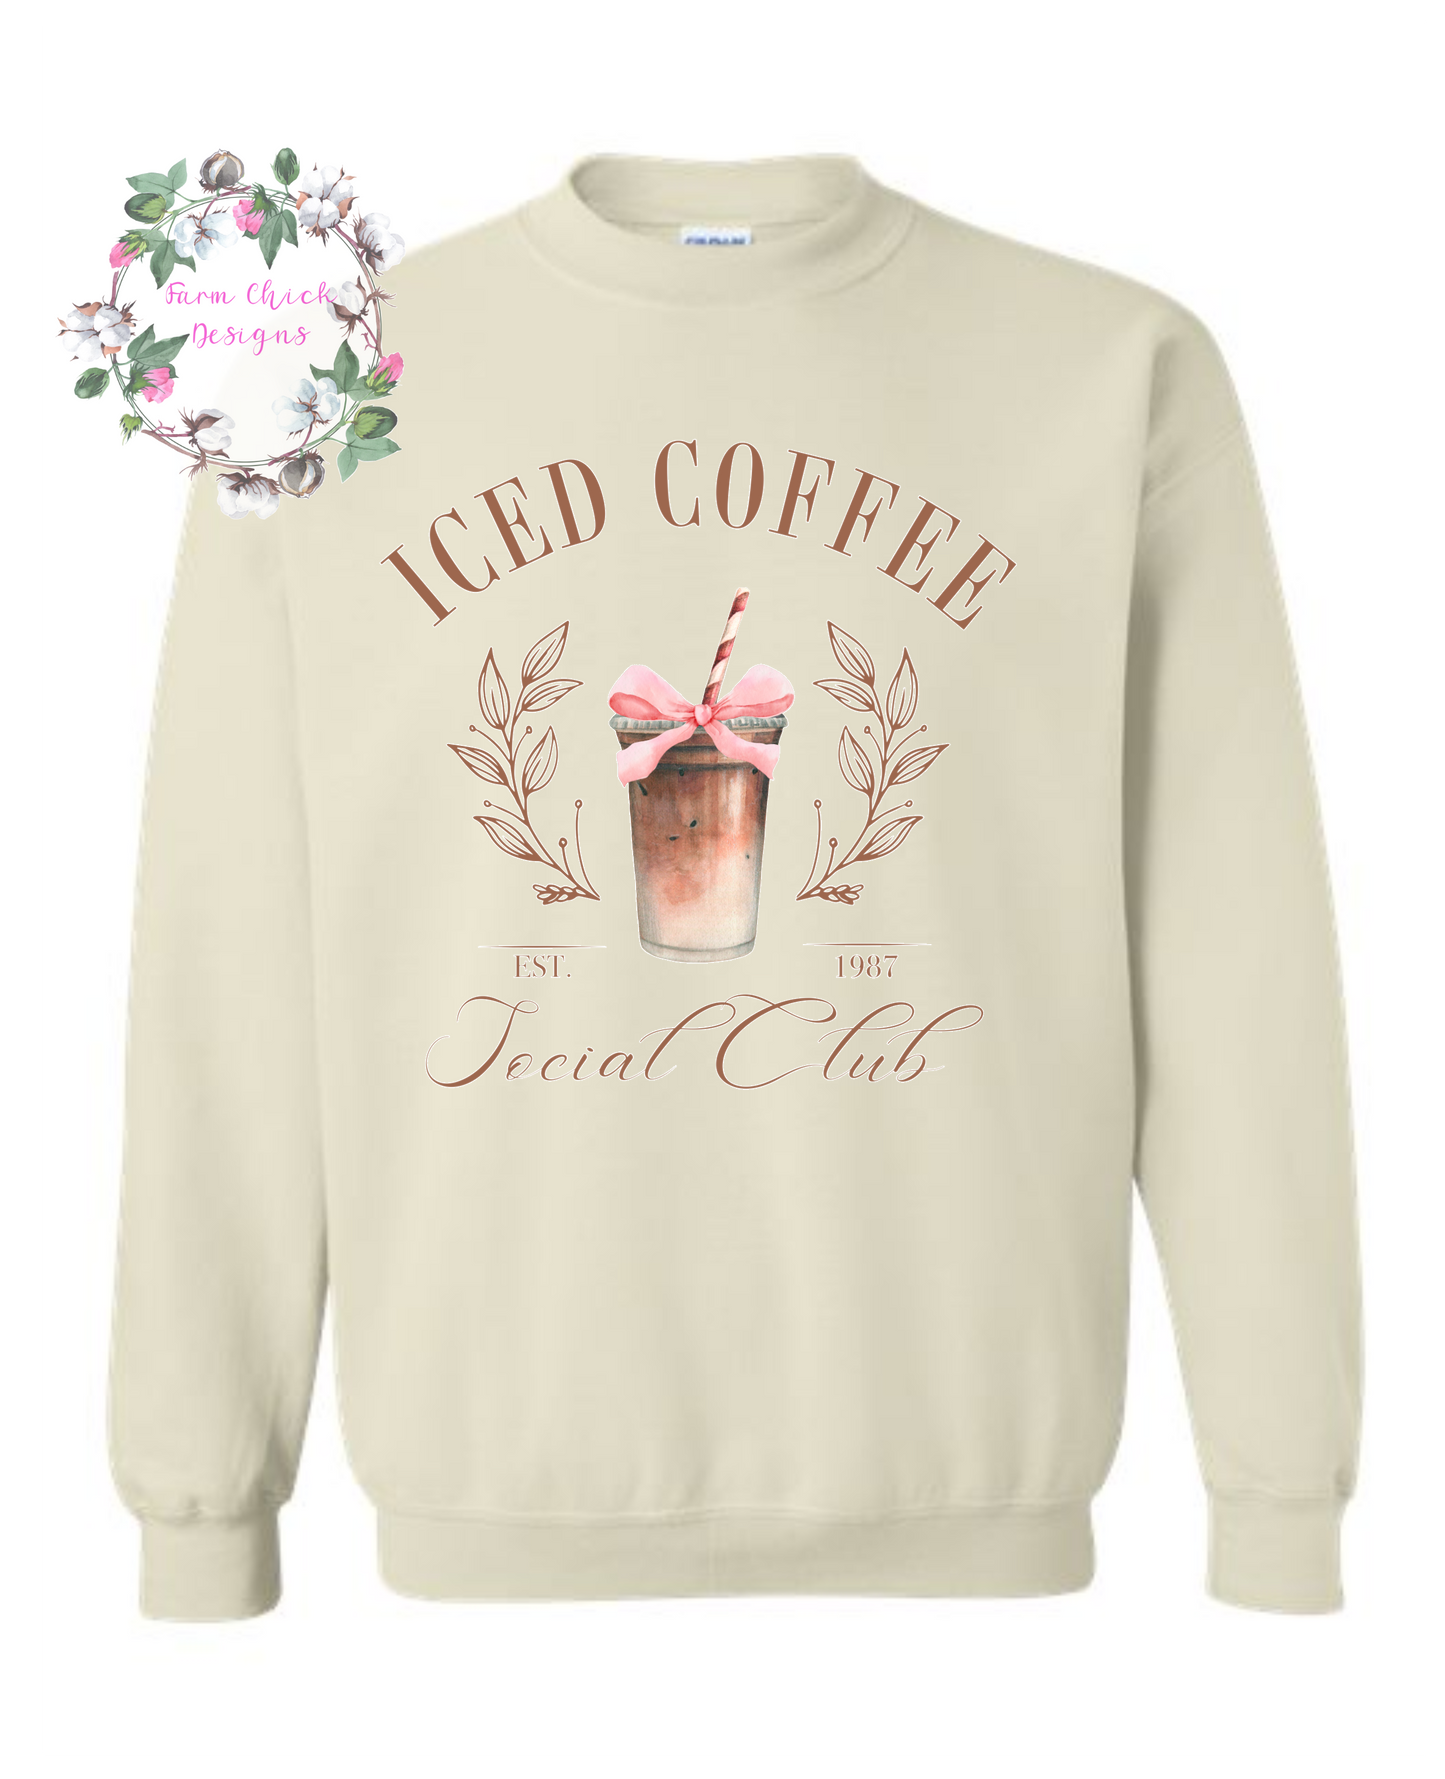 ICED COFFEE SOCIAL CLUB